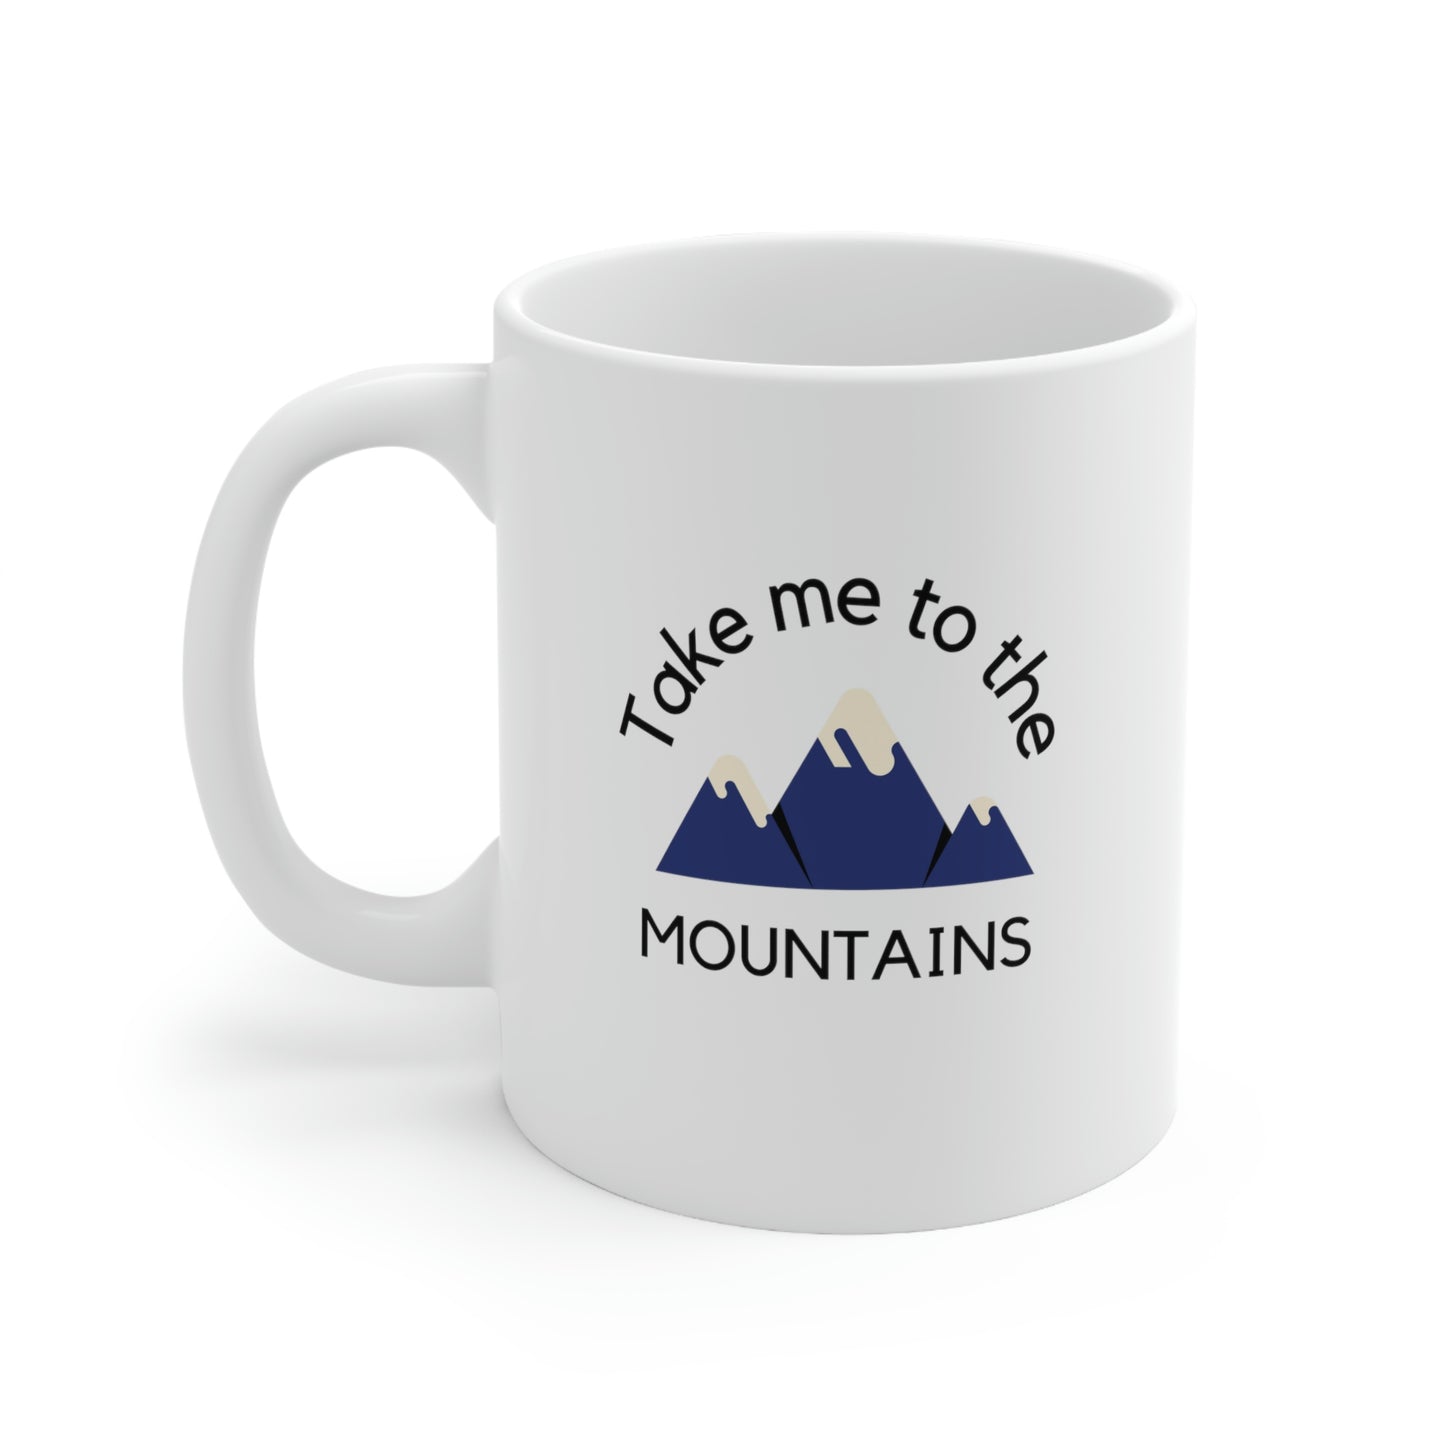 White ceramic coffee mug featuring words "take me to the mountains"